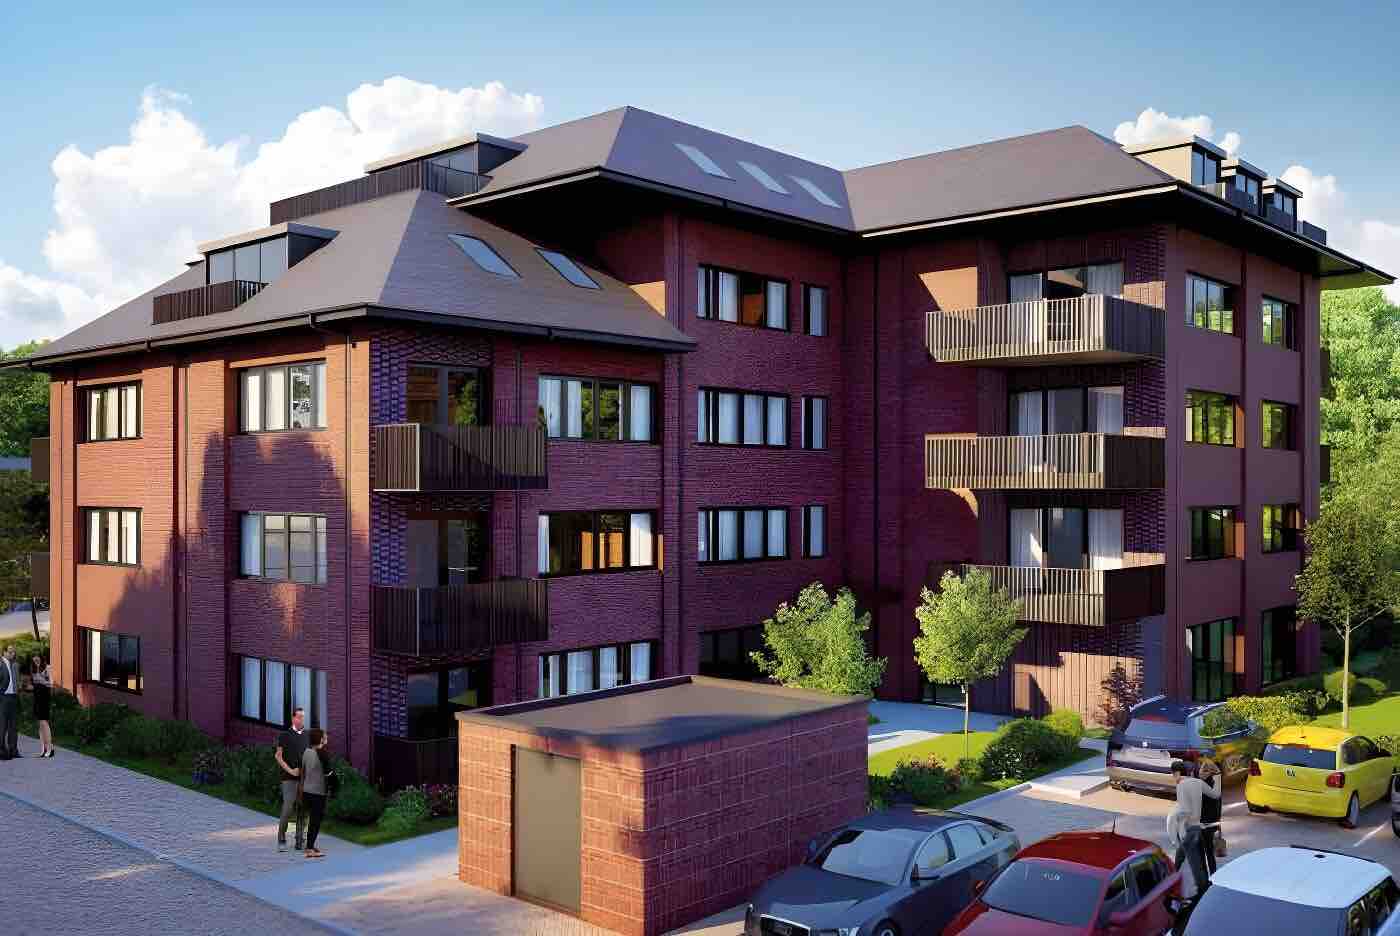 25 Brand-New Apartments for St Albans, Hertfordshire